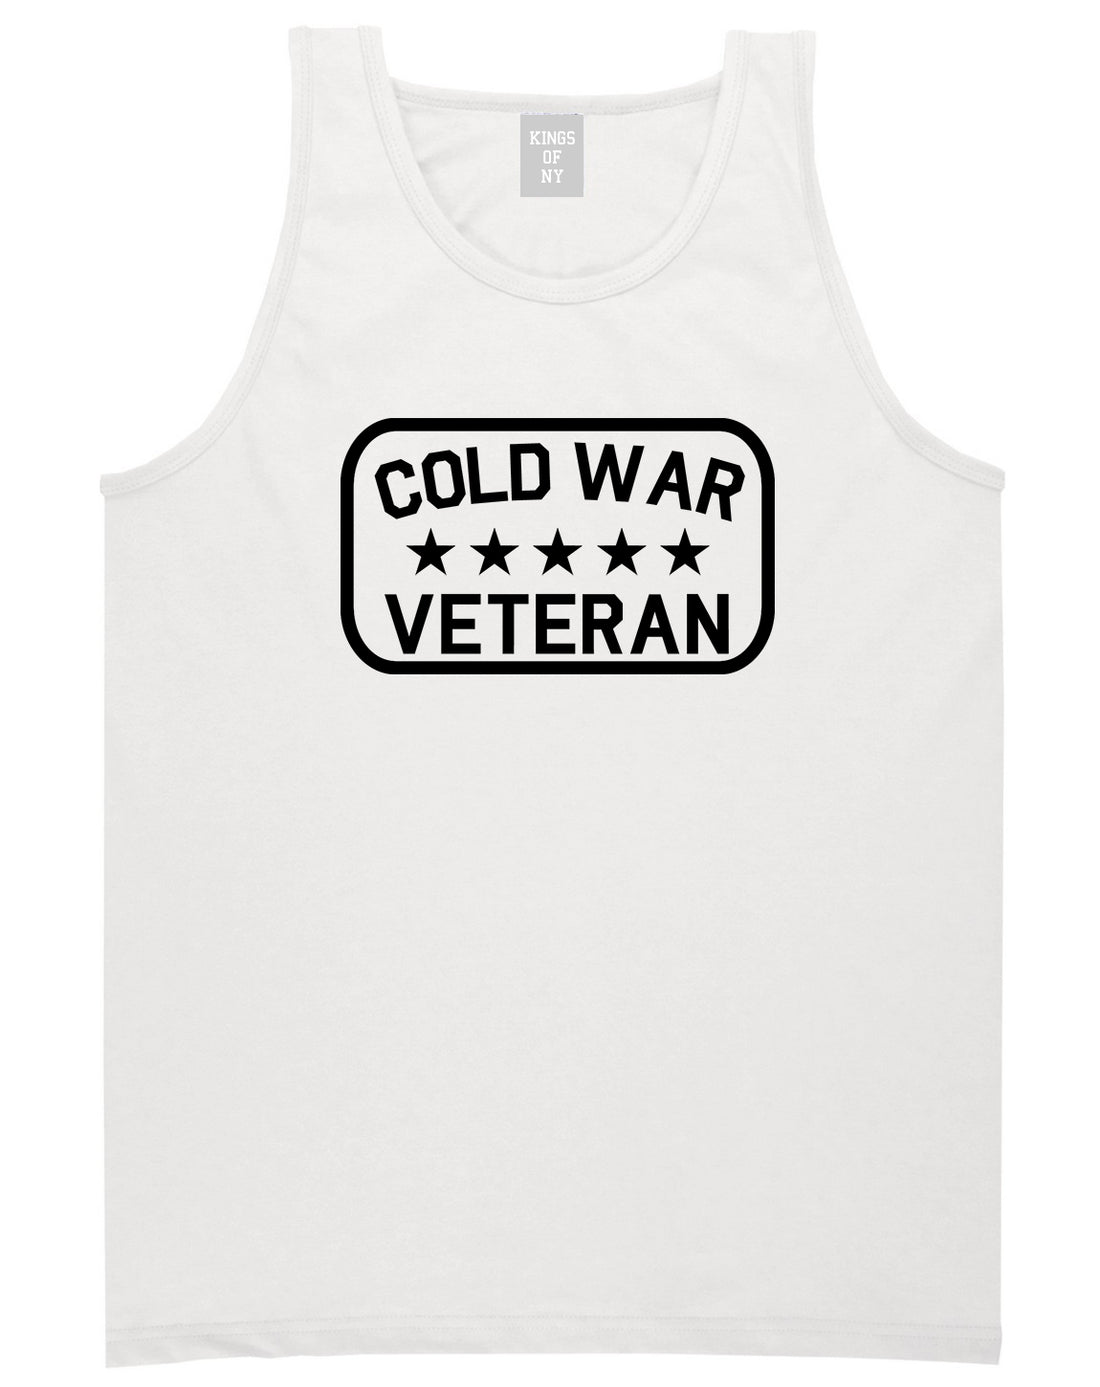 Cold War Veteran Mens Tank Top Shirt White